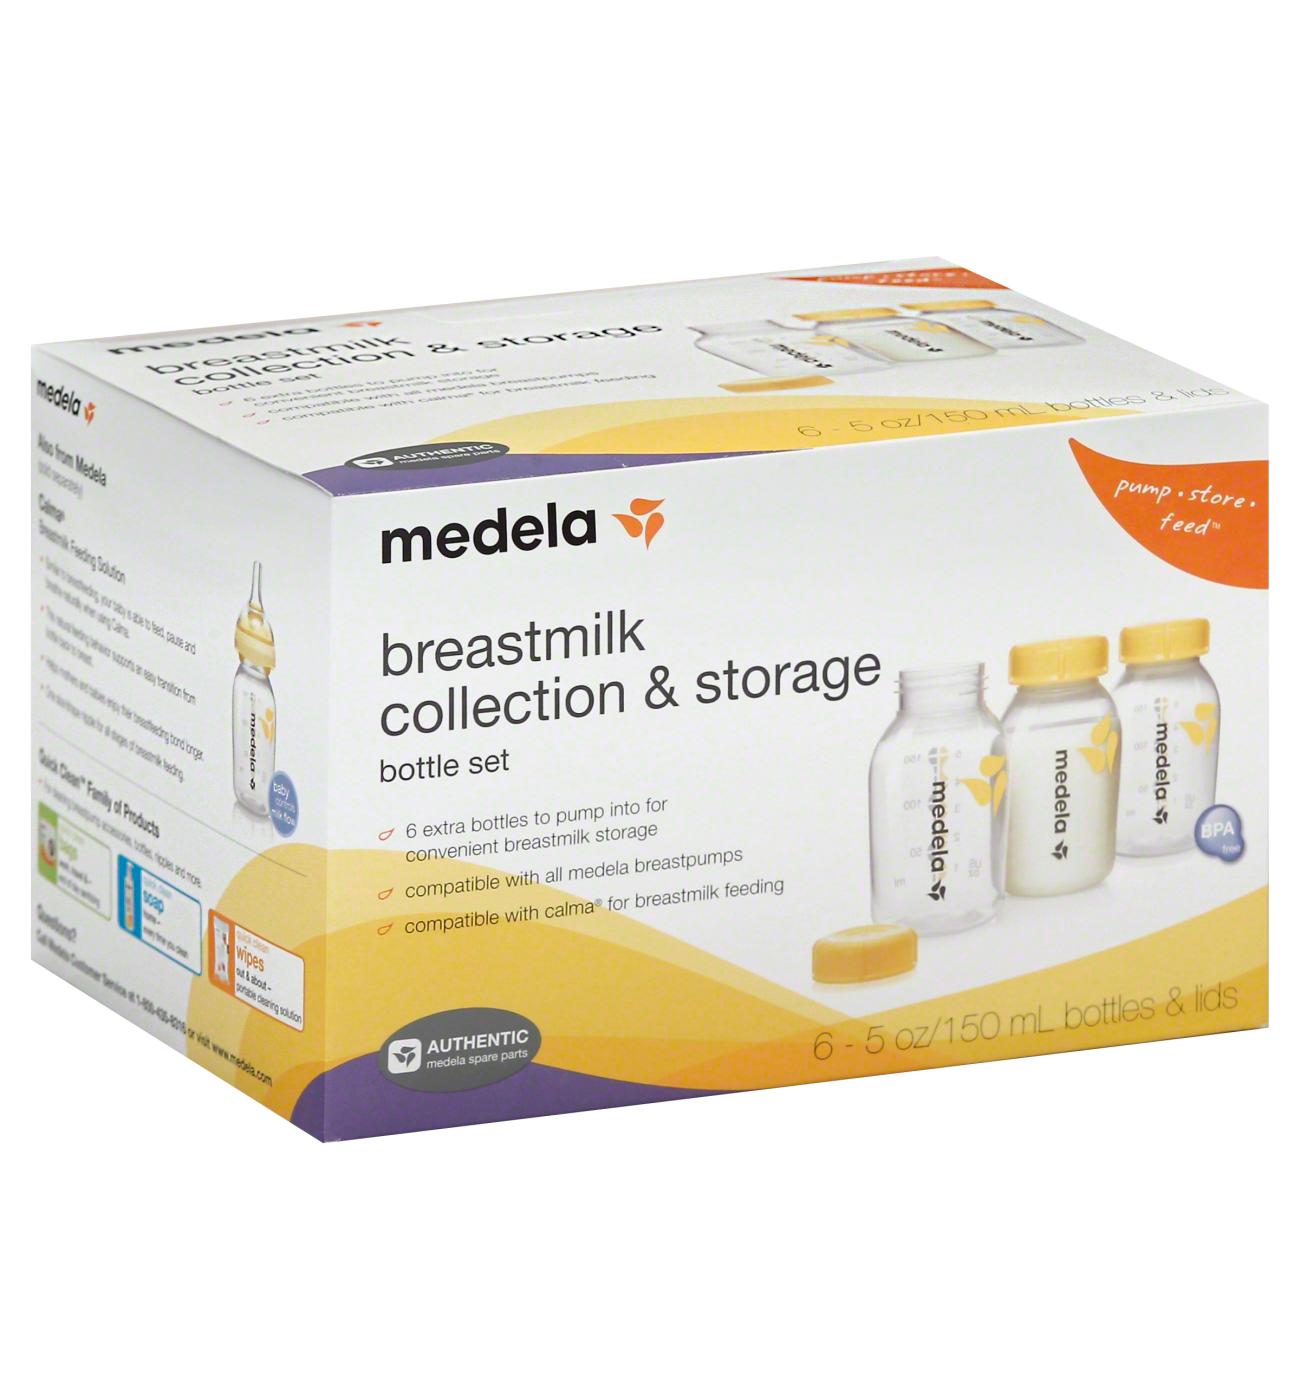 Medela Breast Milk Bottle, 5 Oz.